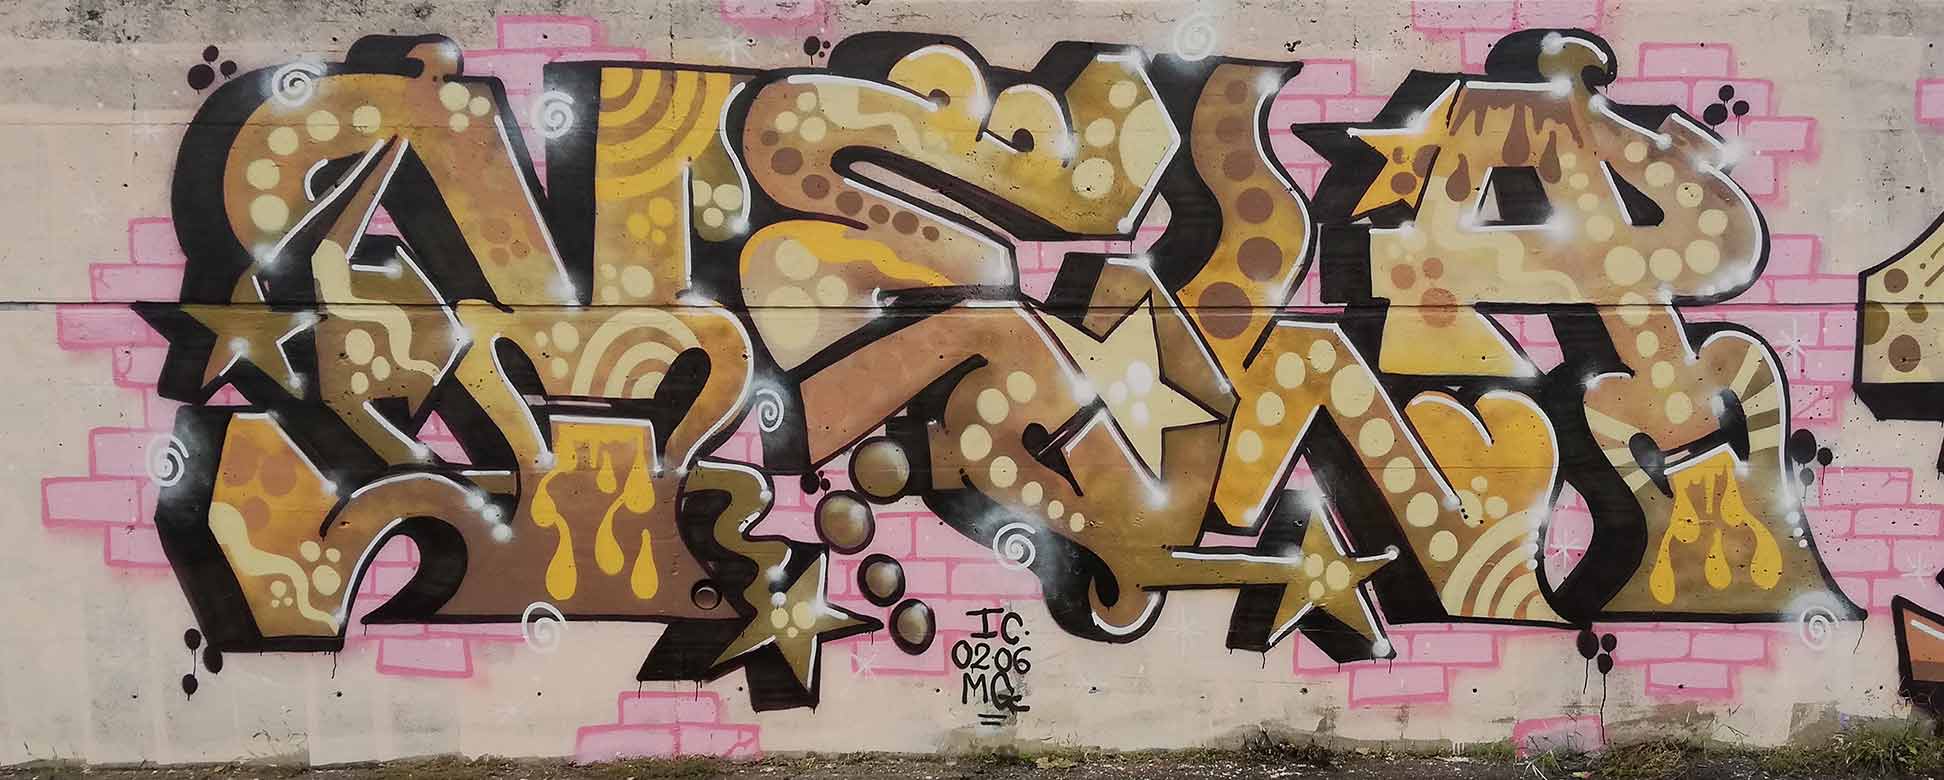 graffiti vela newyork